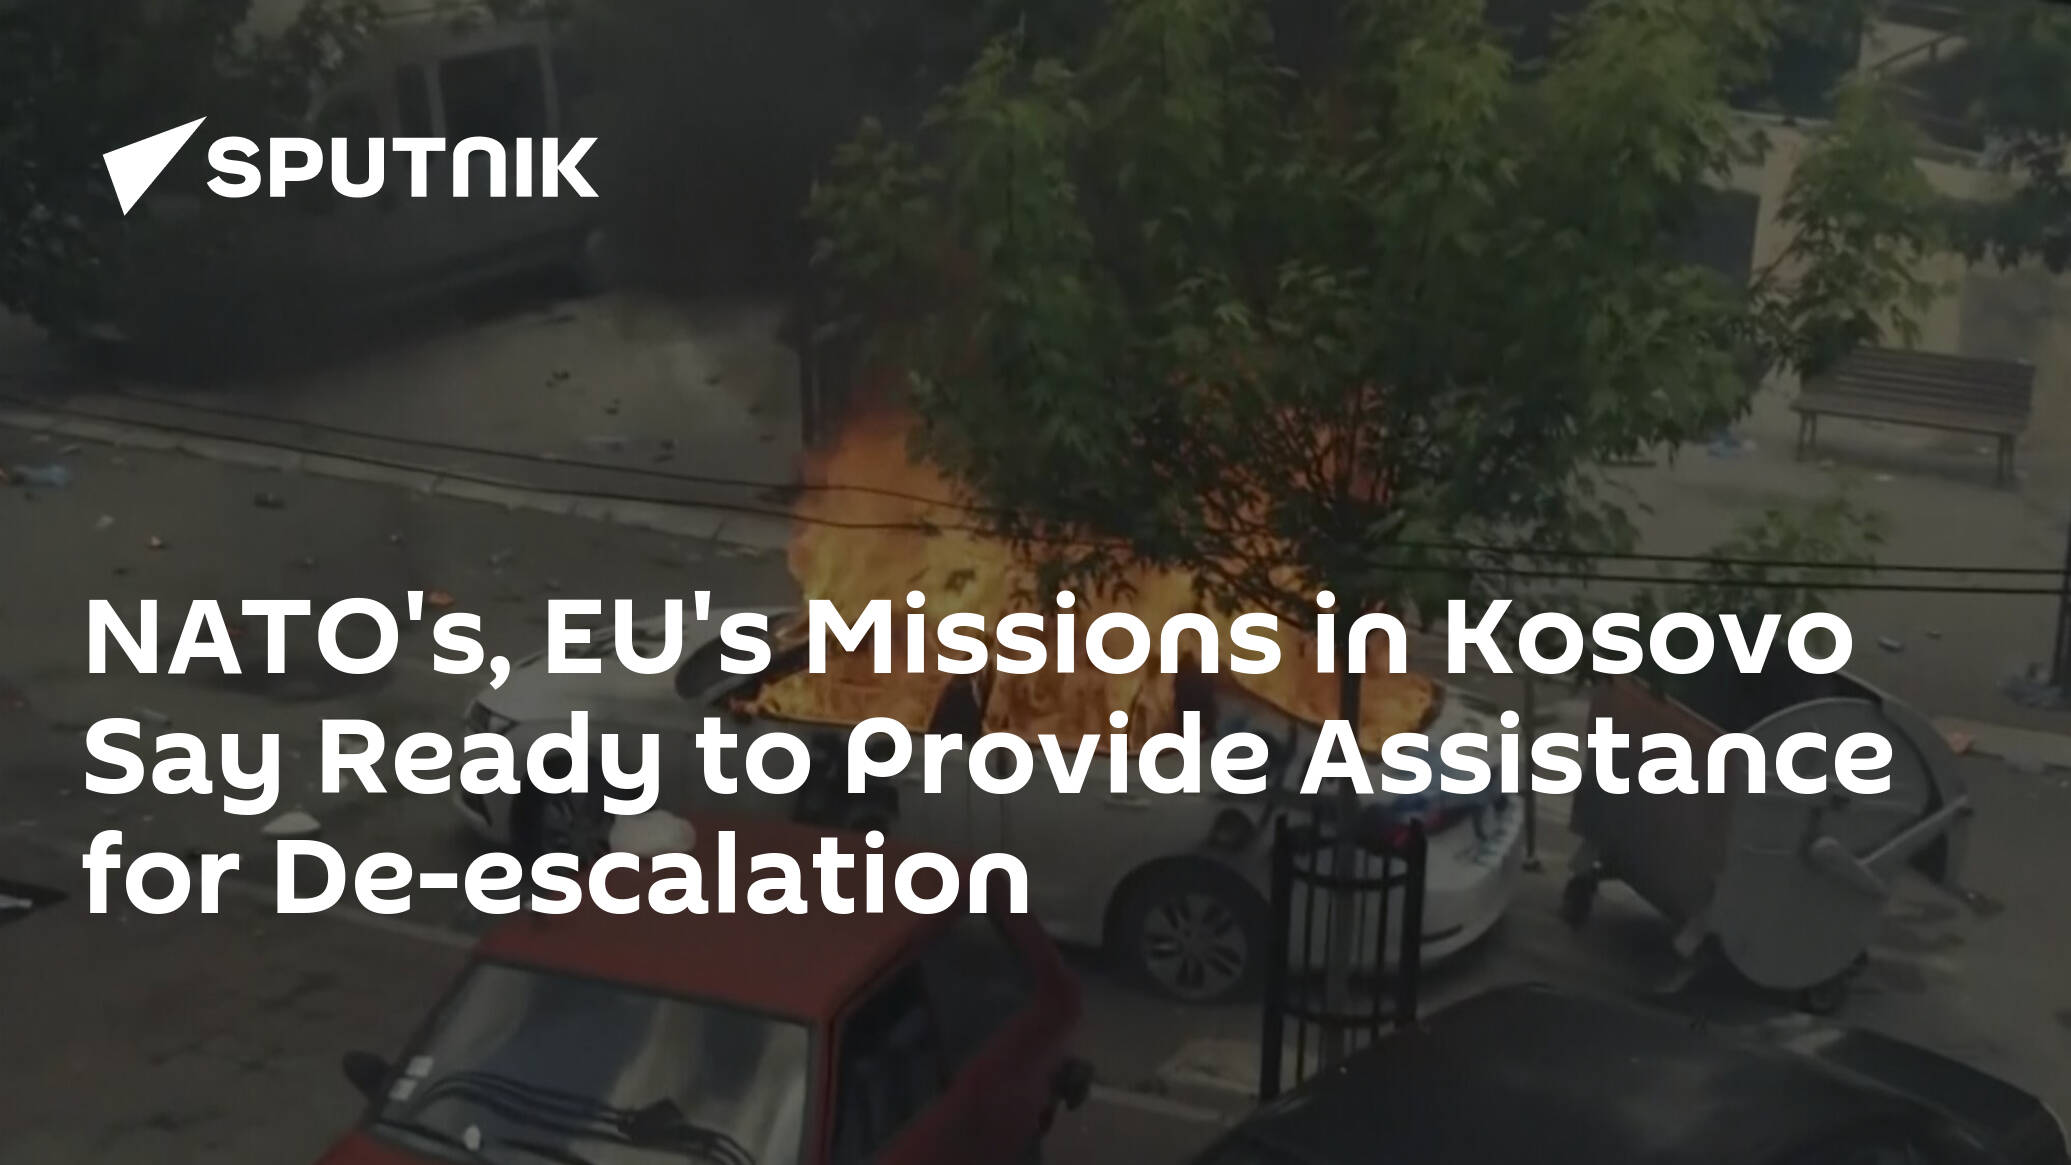 NATO's, EU's Missions in Kosovo Say Ready to Provide Assistance for De-escalation